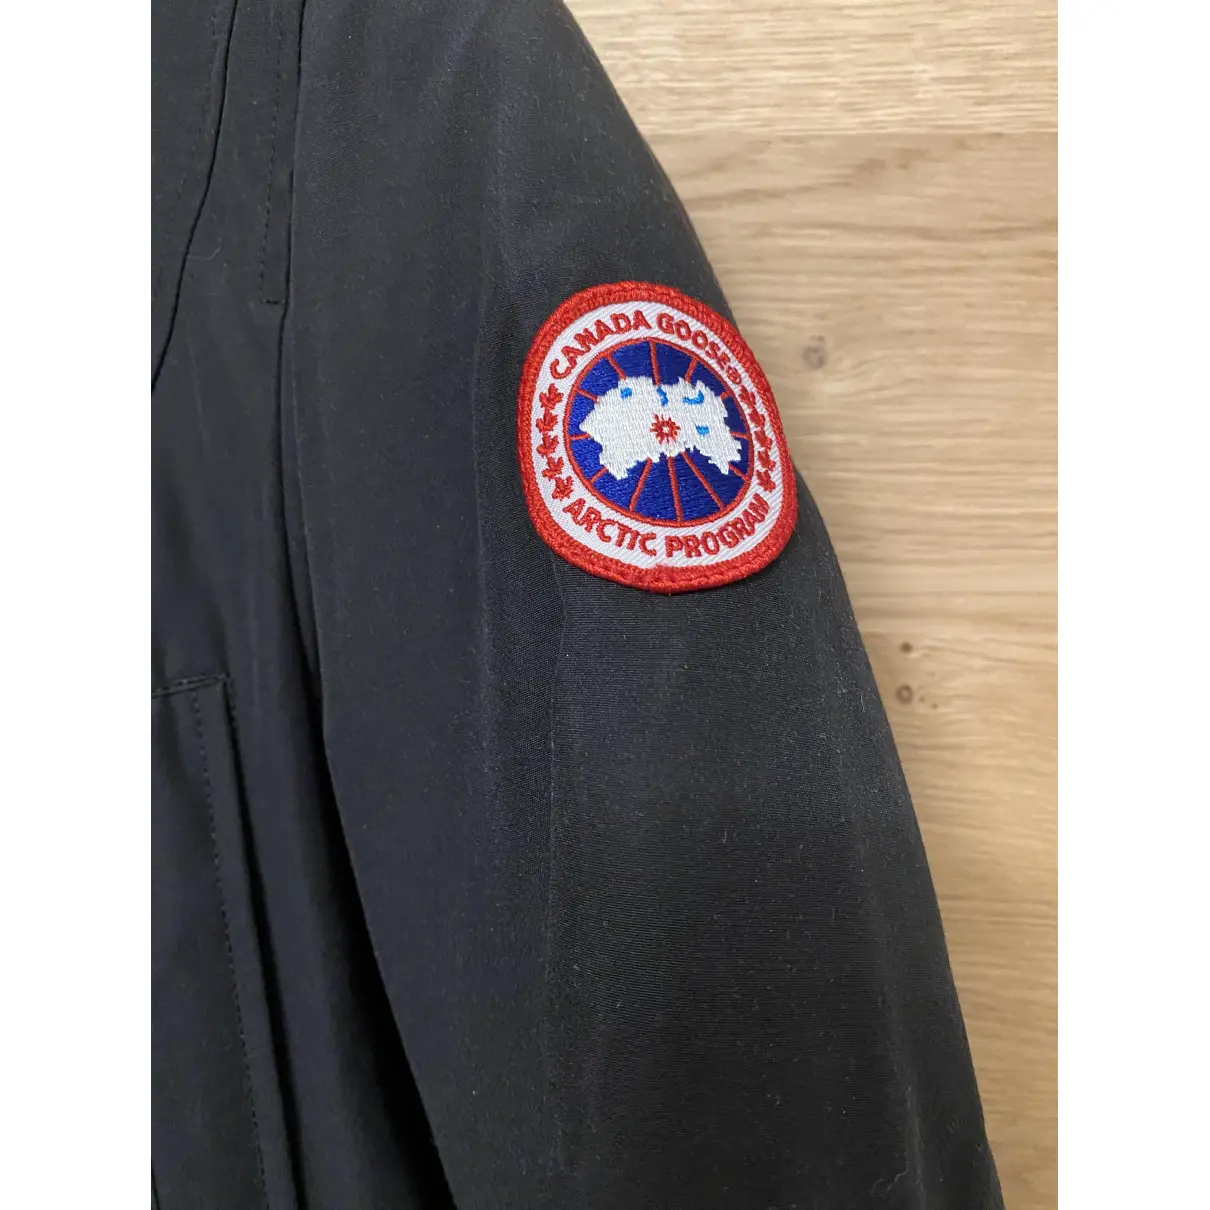 Buy Canada Goose Black Synthetic Coat online